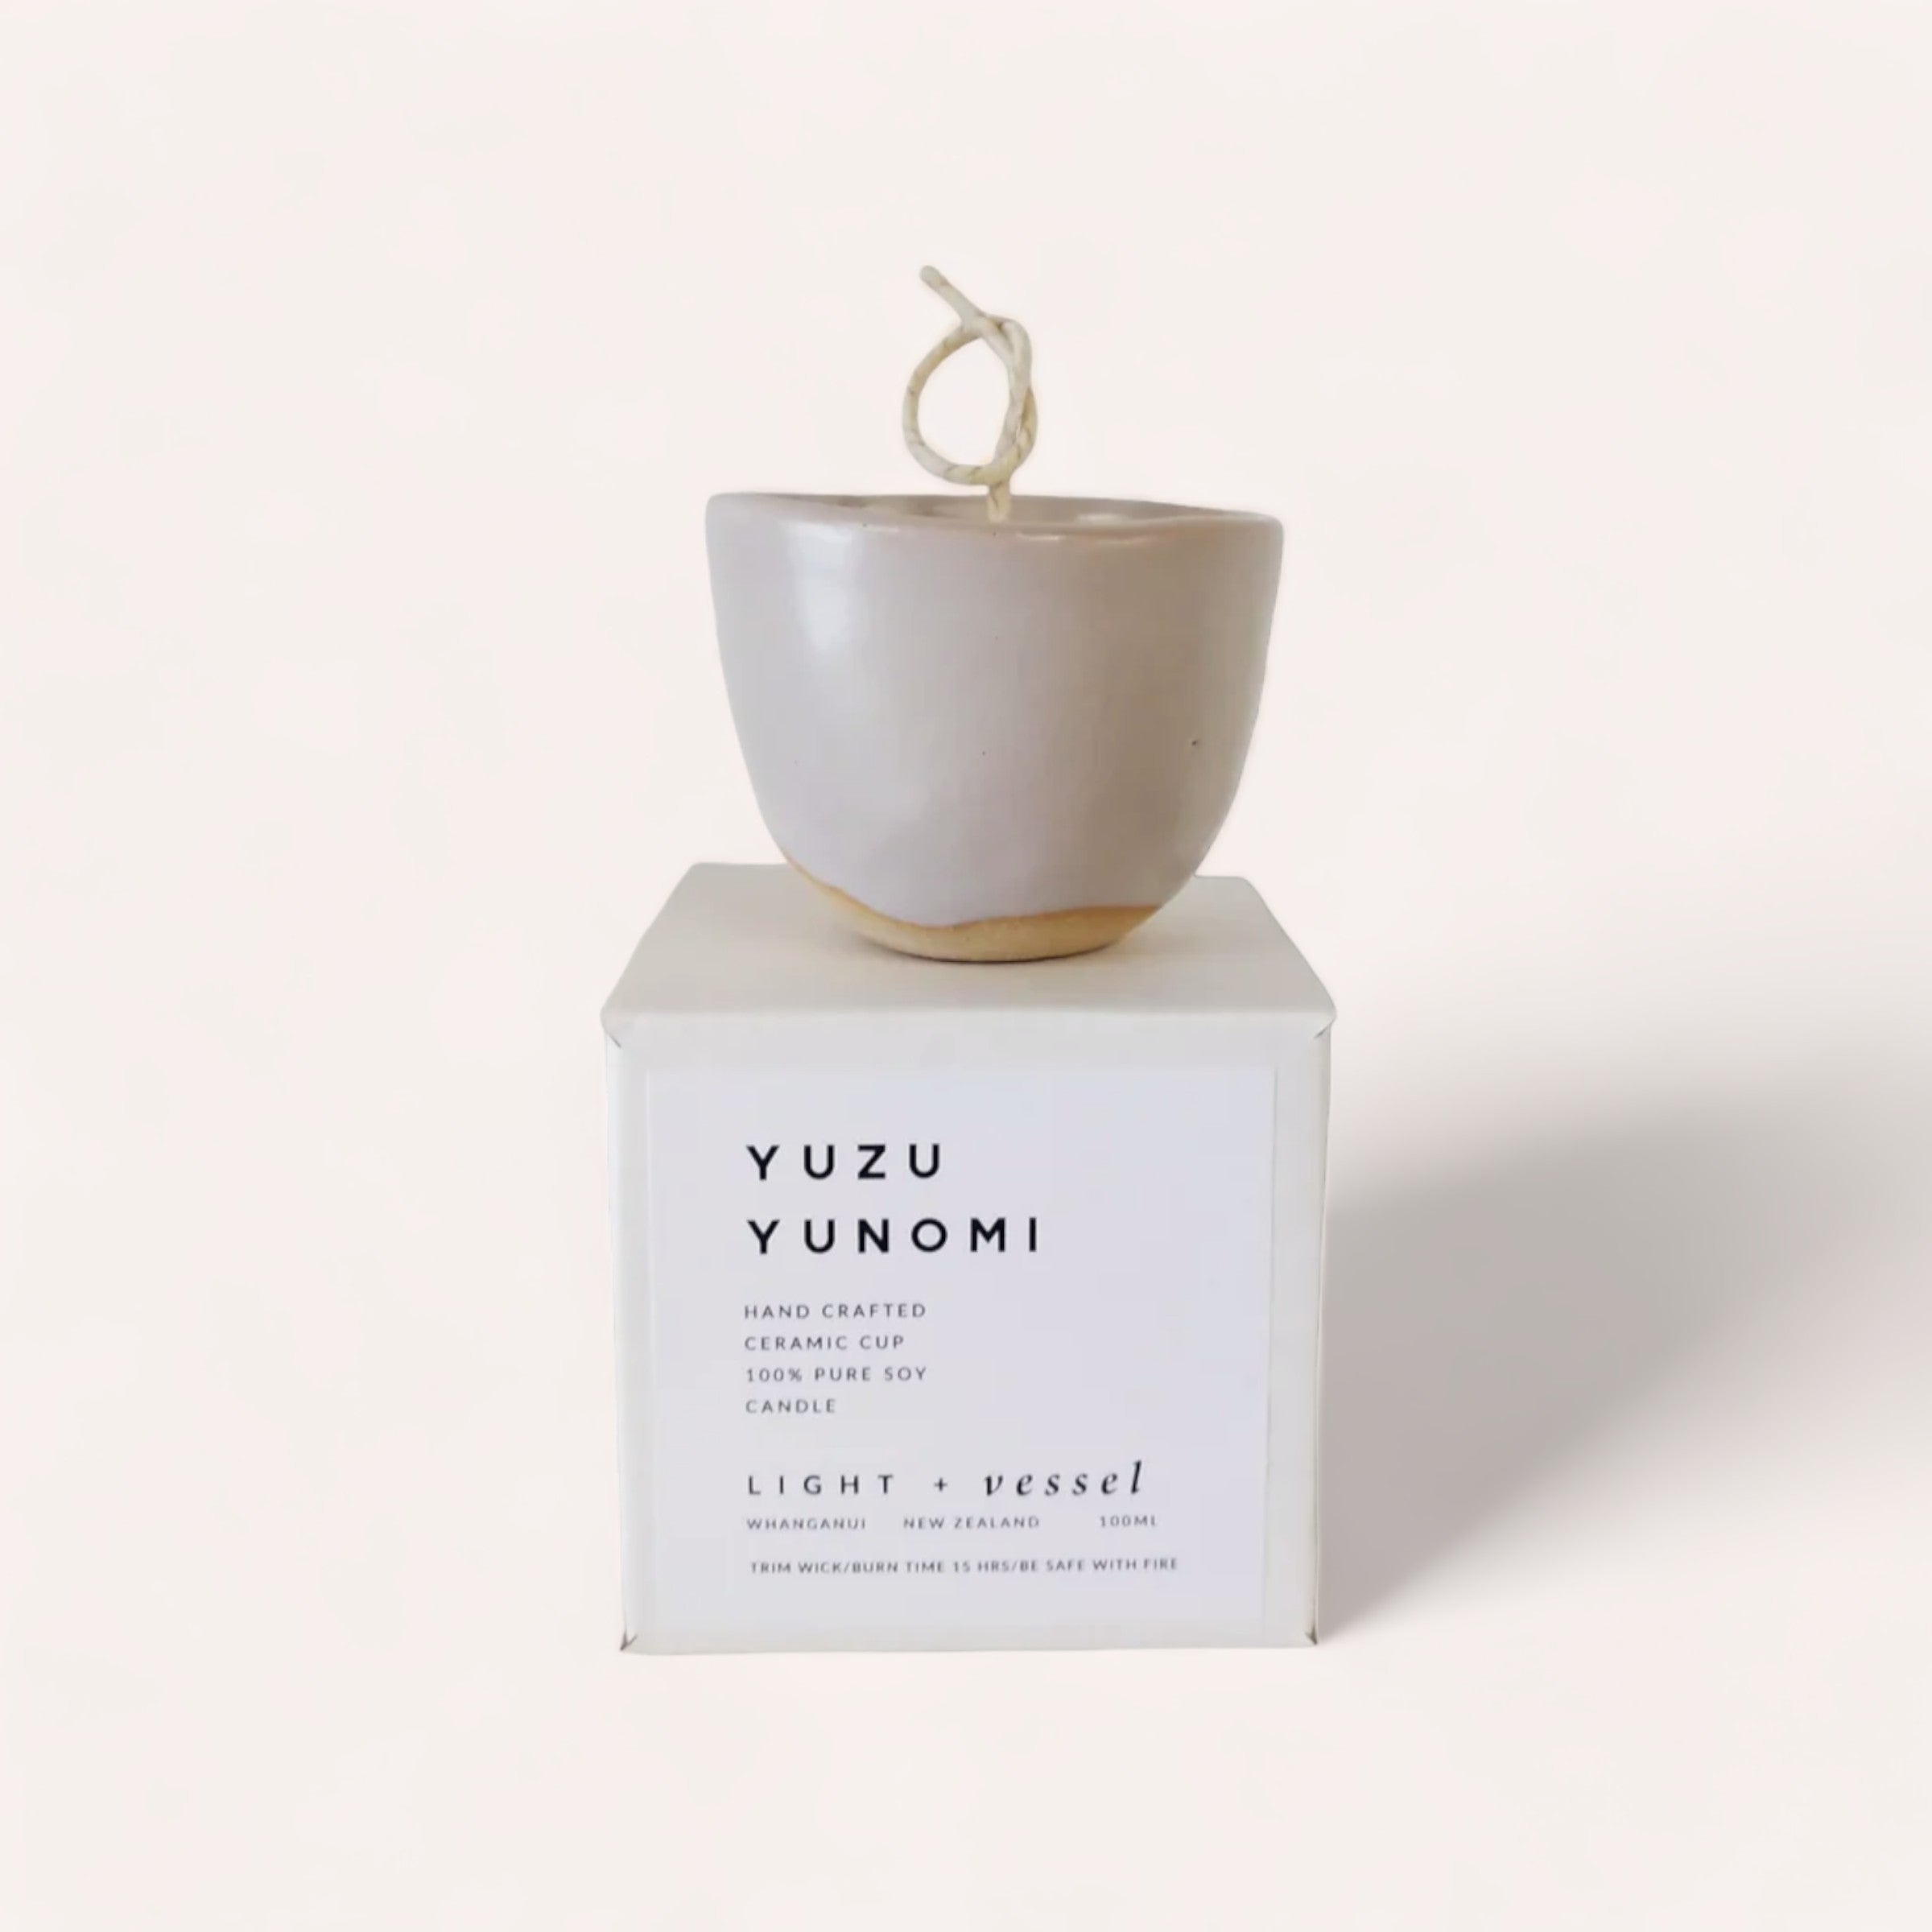 yuzu candle by light + vessel